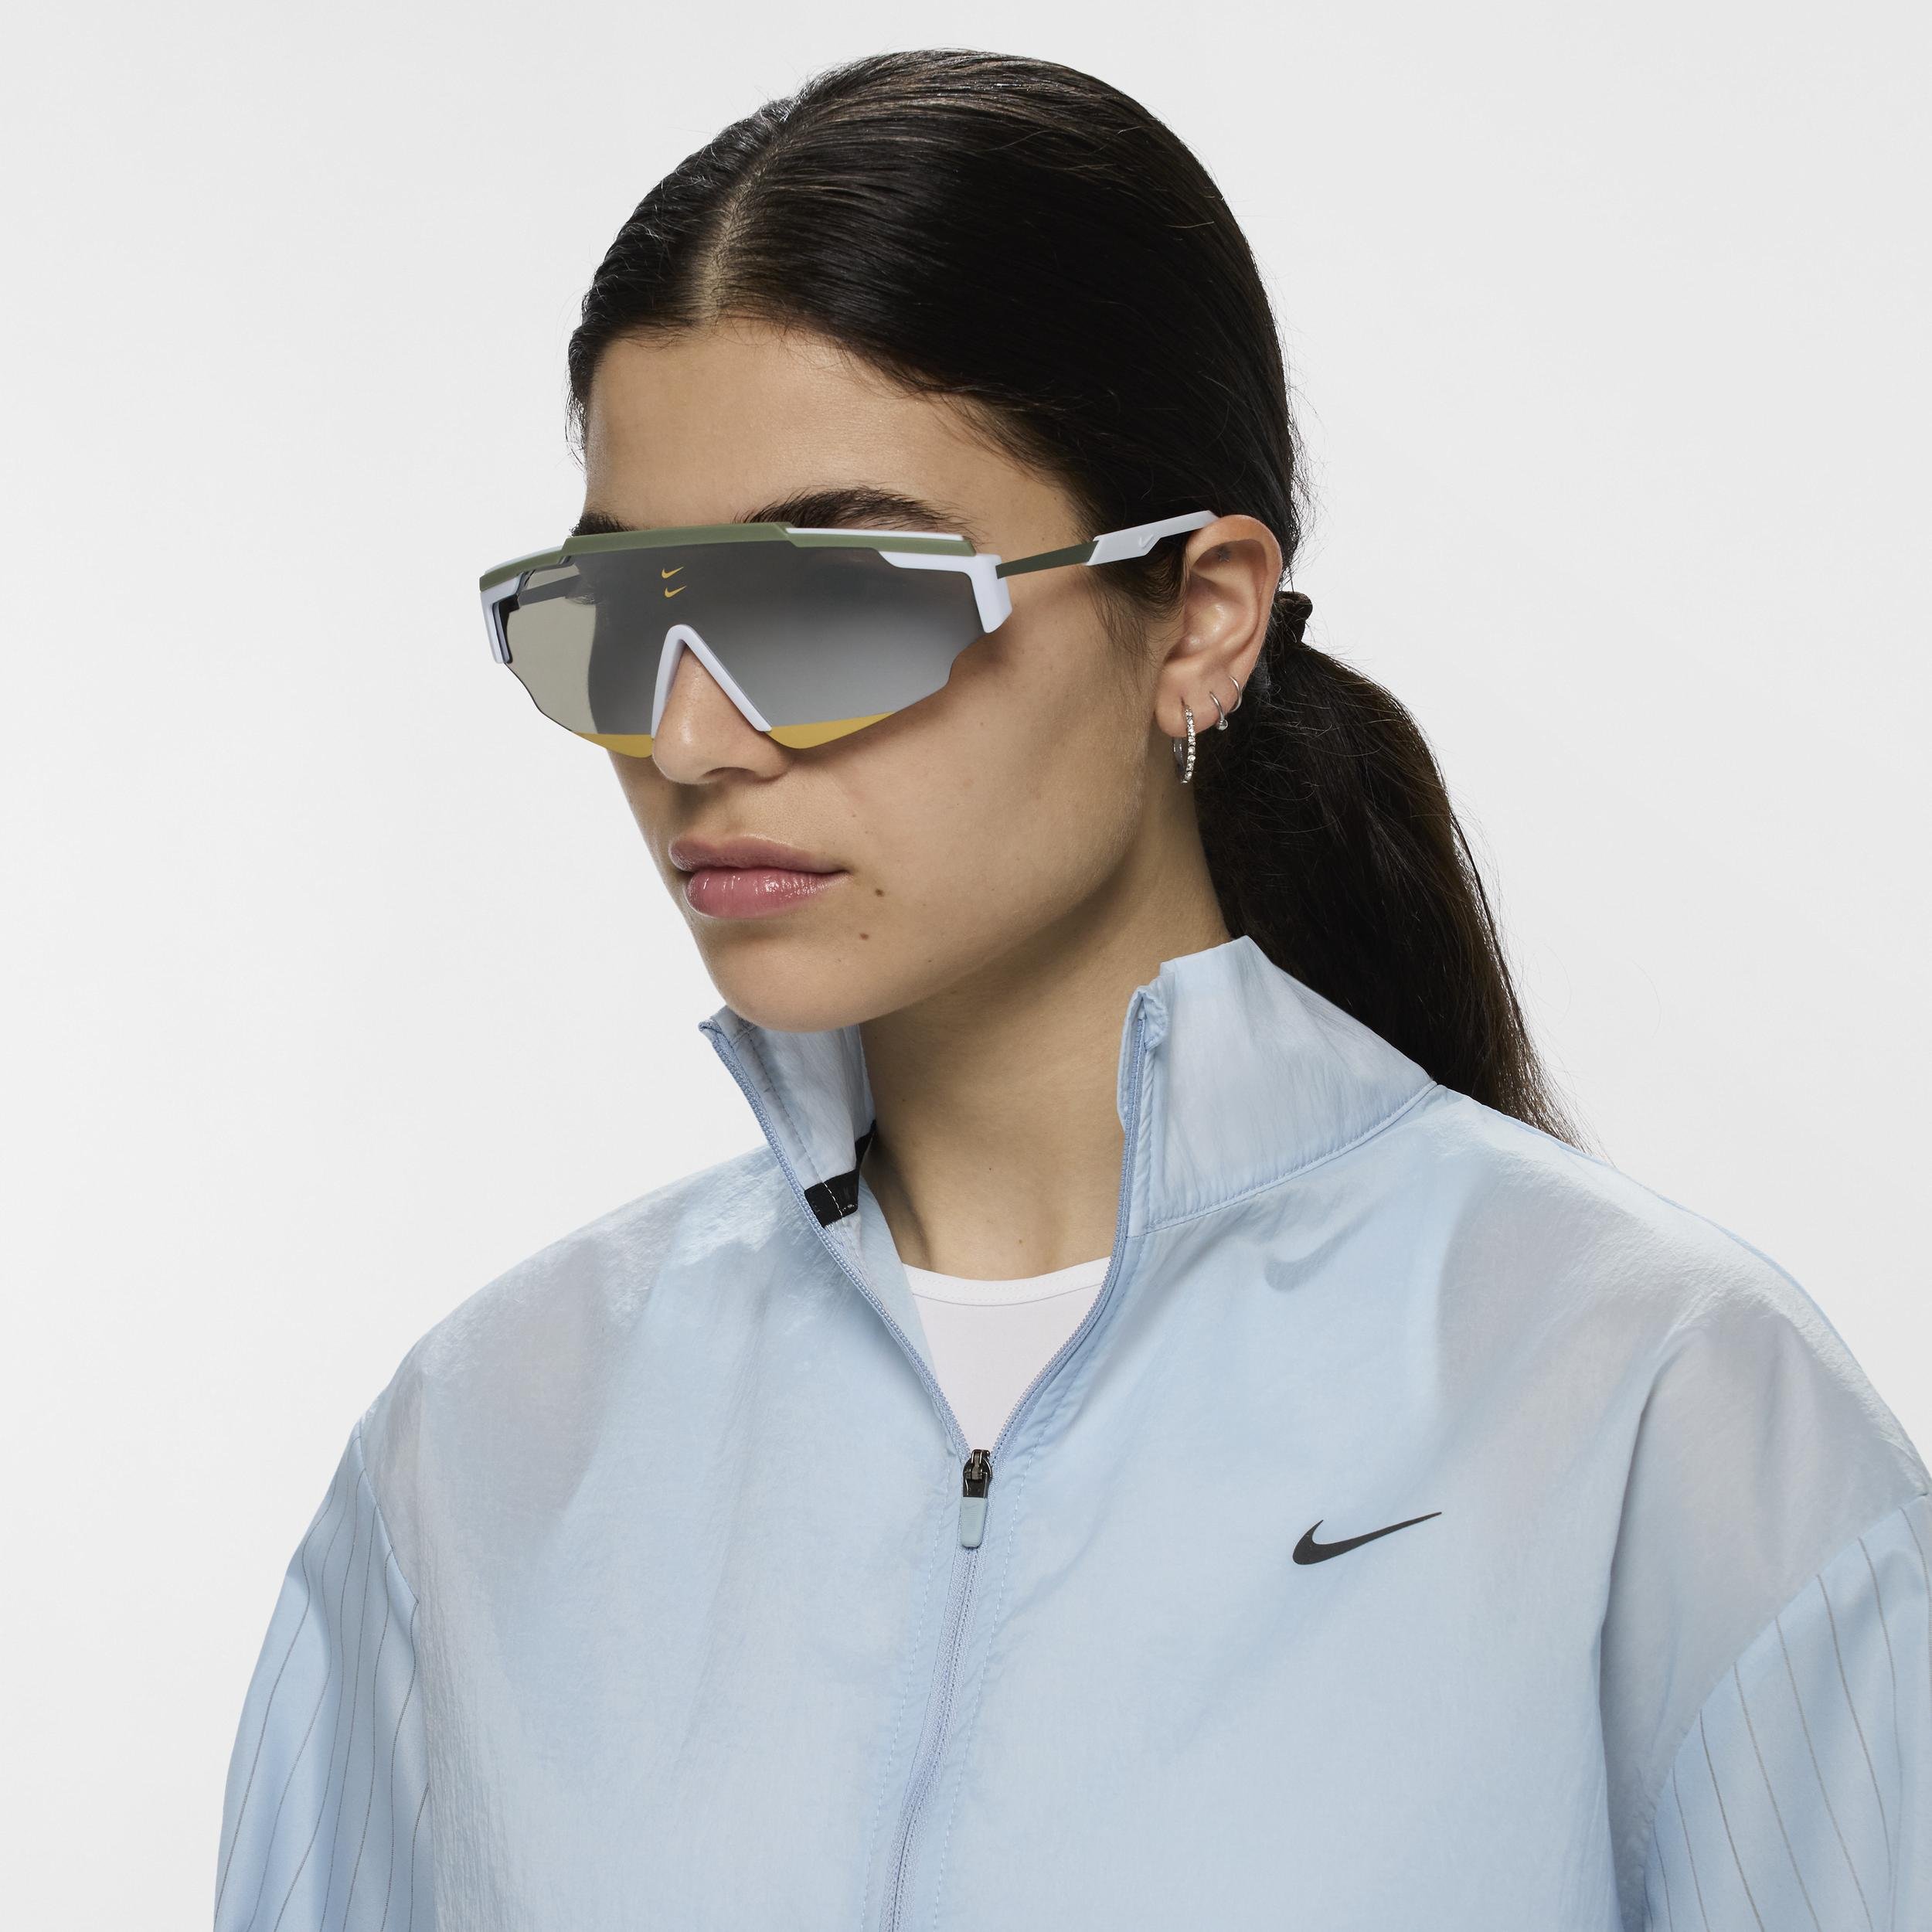 Nike Unisex Marquee Edge Mirrored Sunglasses by NIKE